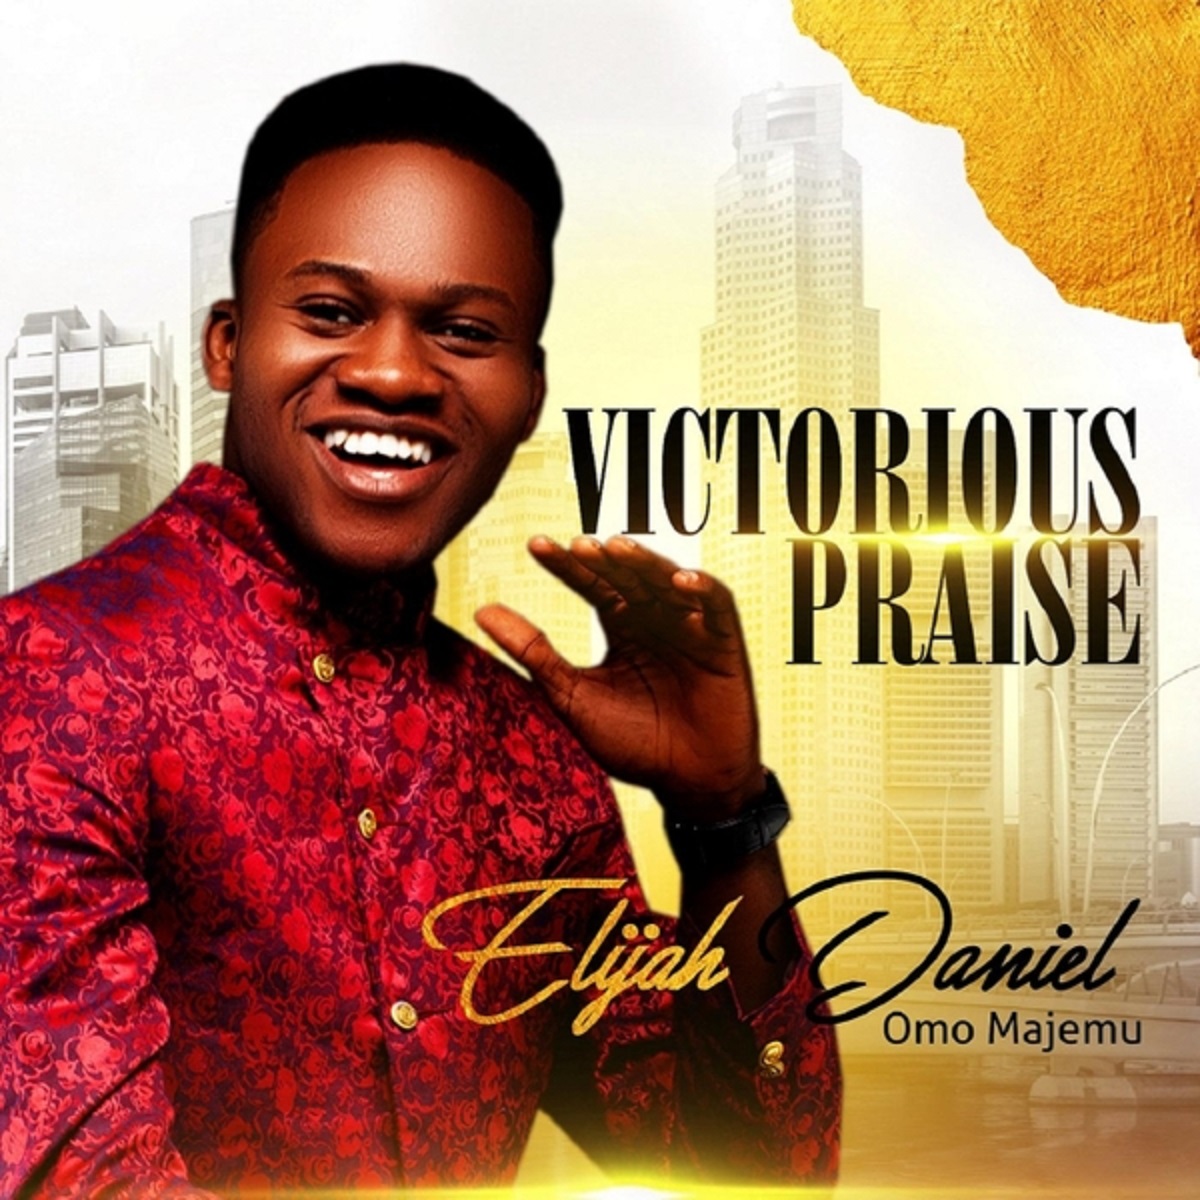 Victorious Praise - Elijah Daniel Omo Majemu (Album)